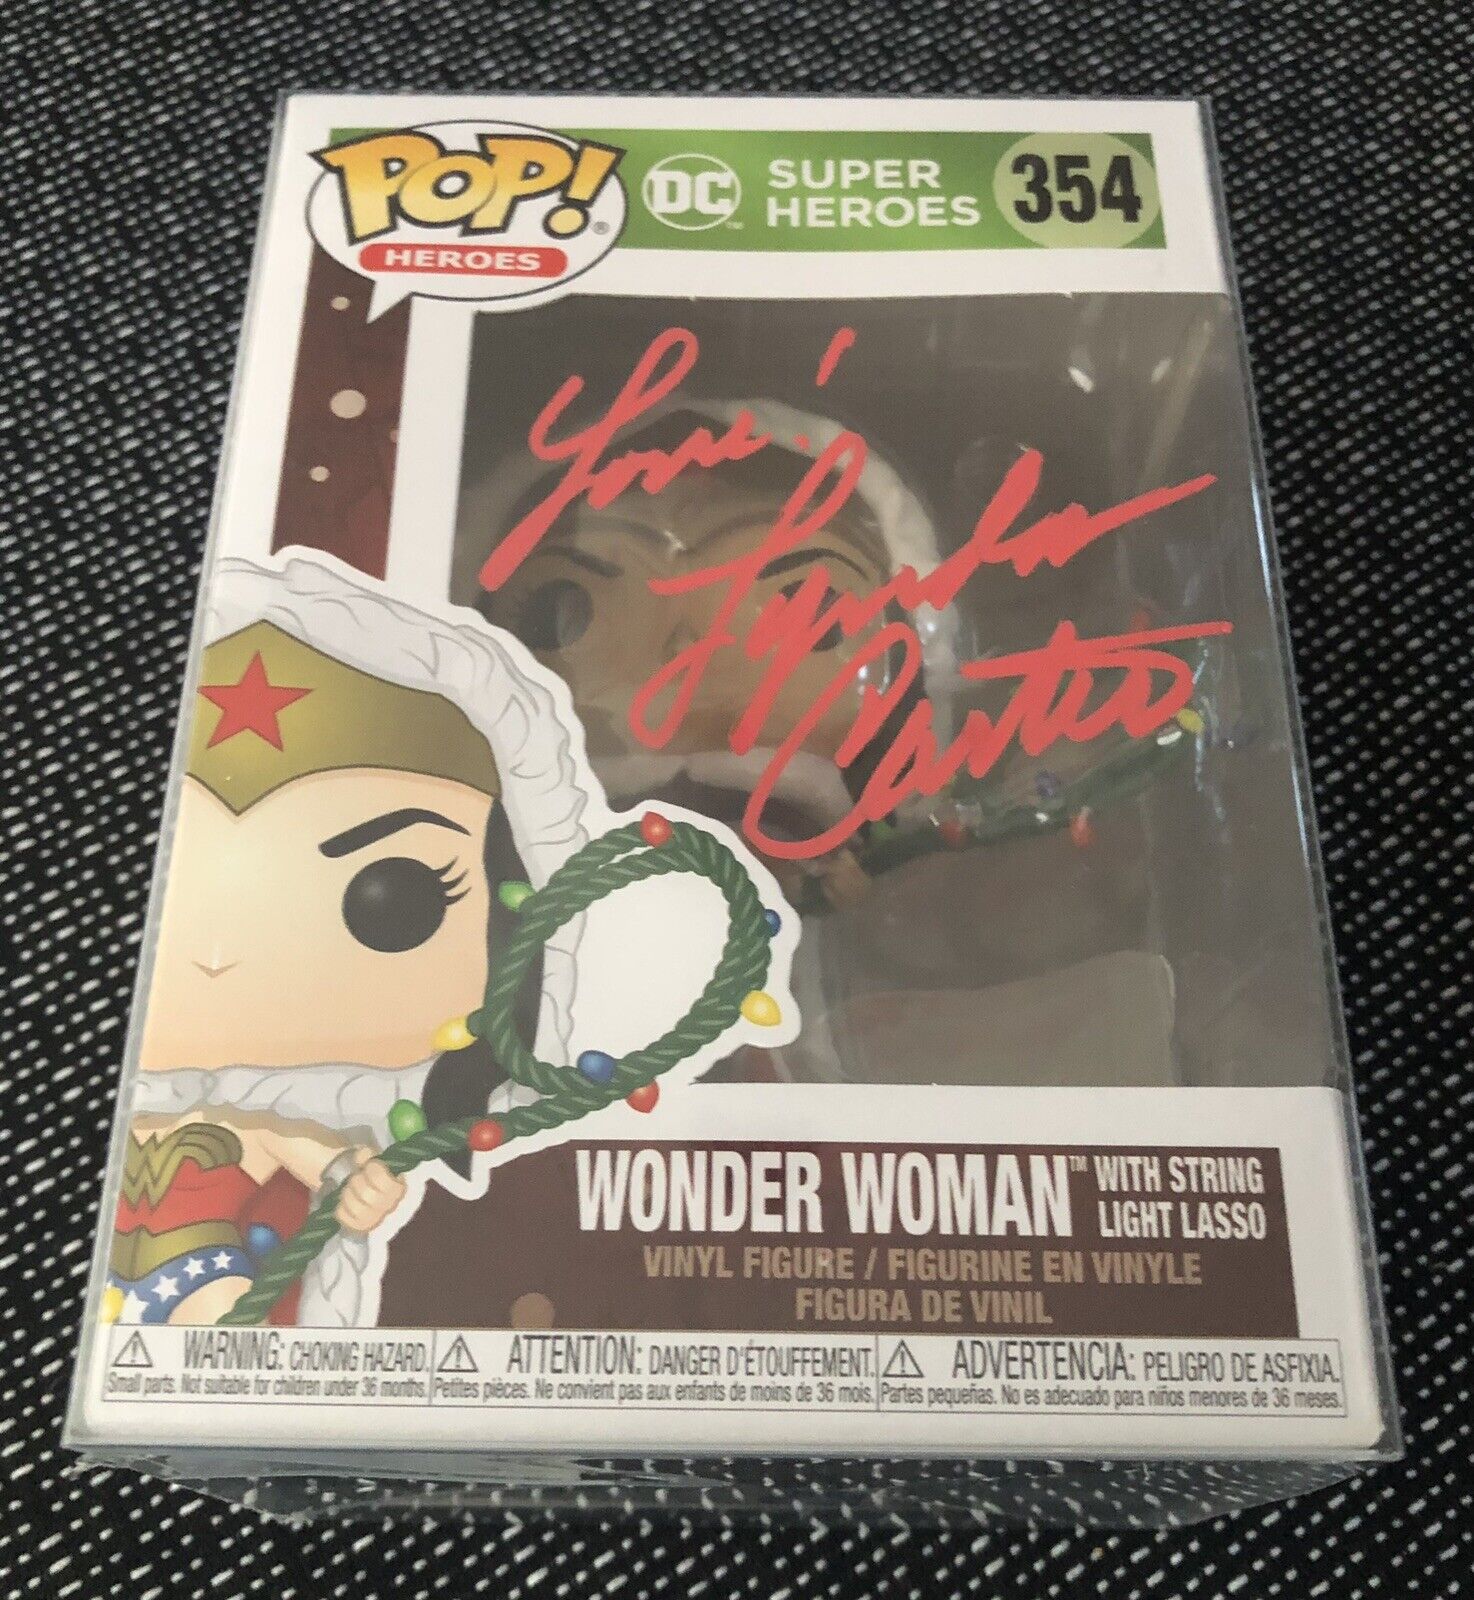 Lynda Carter Autographed Wonder Woman Super Heroes W/COA POP Vinyl Figure #354